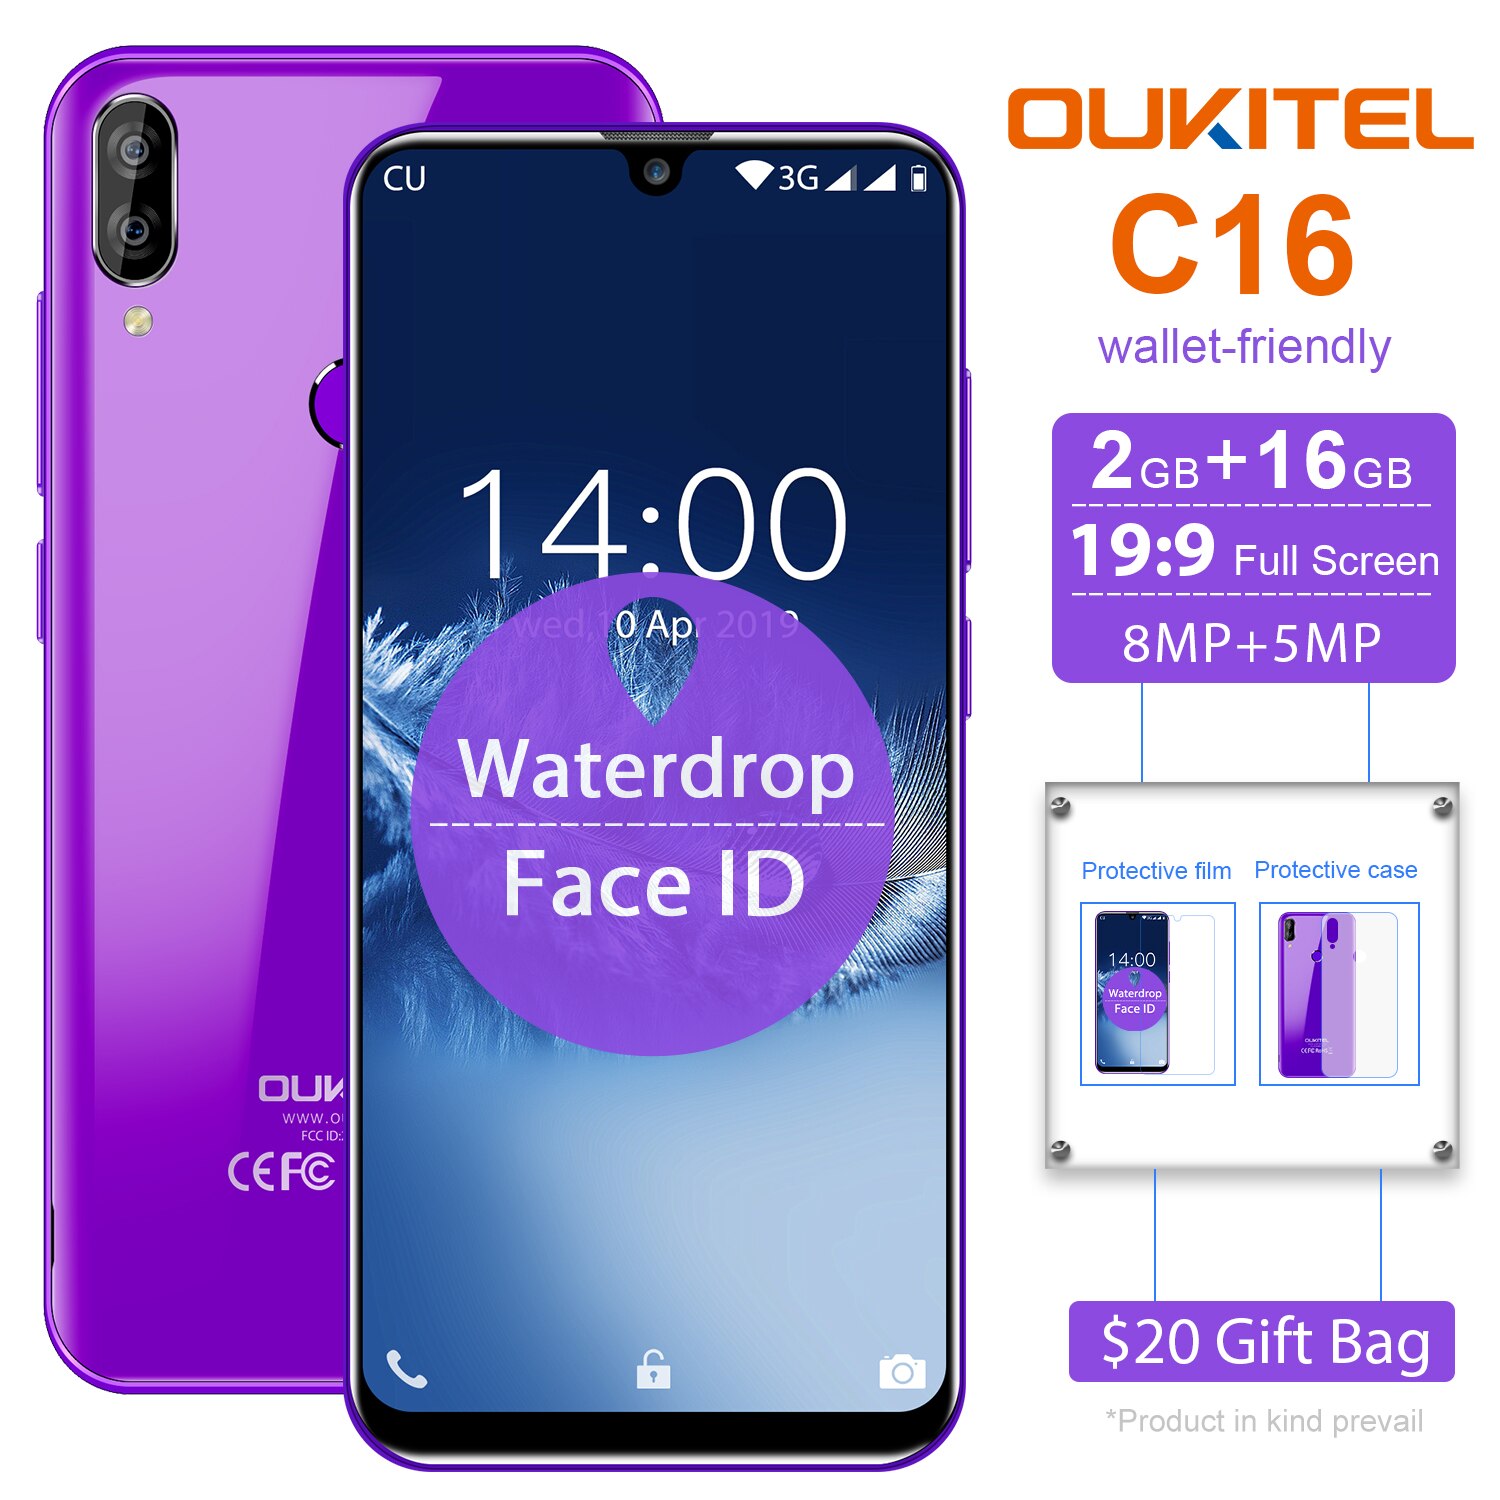 OUKITEL C16 5.71" HD+ 19:9 WaterDrop Smartphone Fingerprint Android 9.0 Mobile Phone MT6580P 2G RAM 16G ROM 2600mAh Unlock